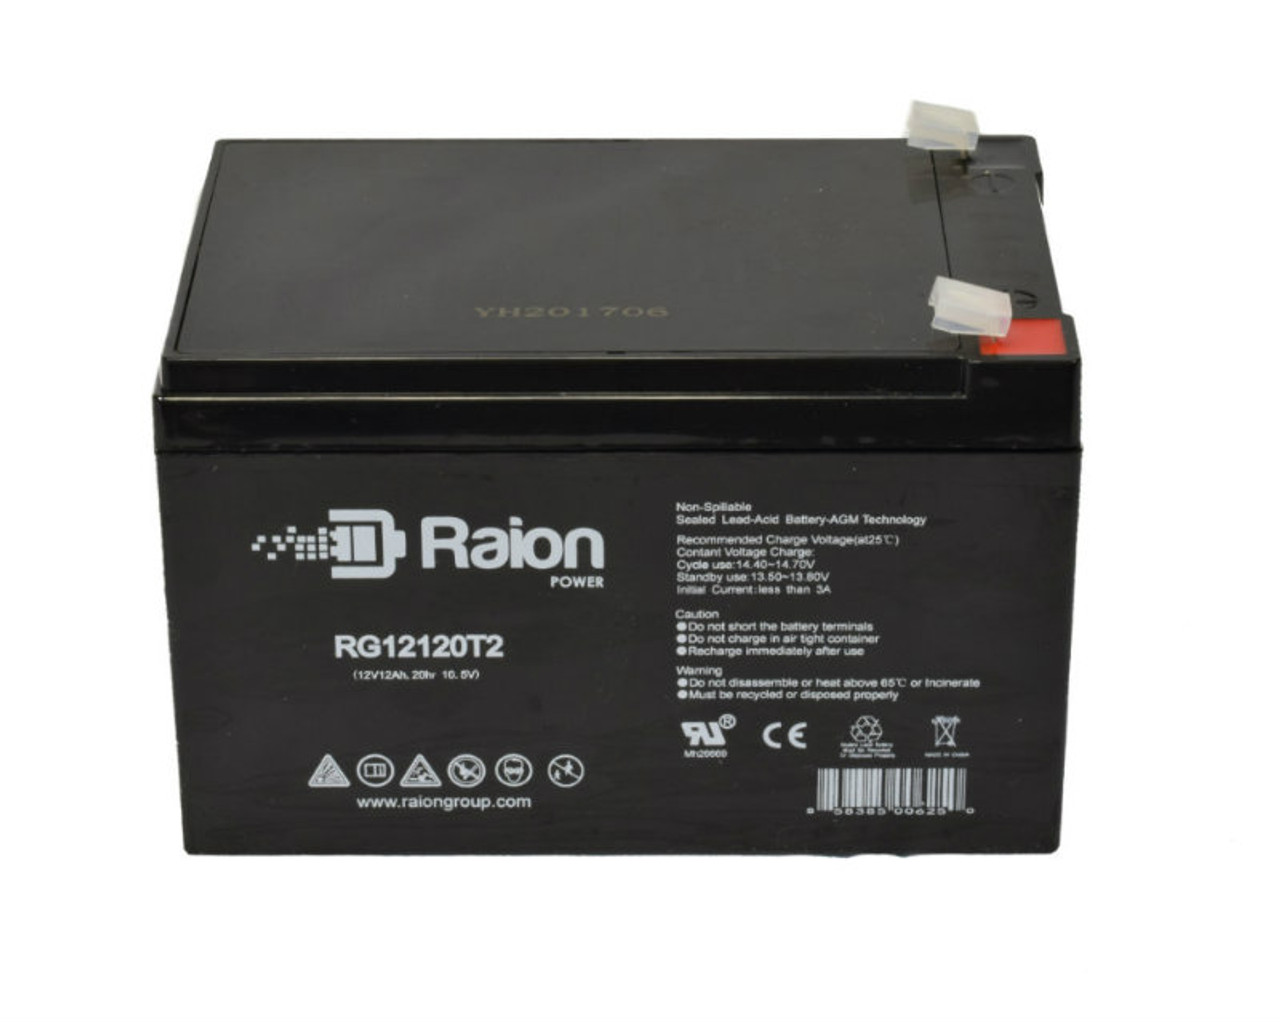 Raion Power RG12120T2 SLA Battery for PM PM12120